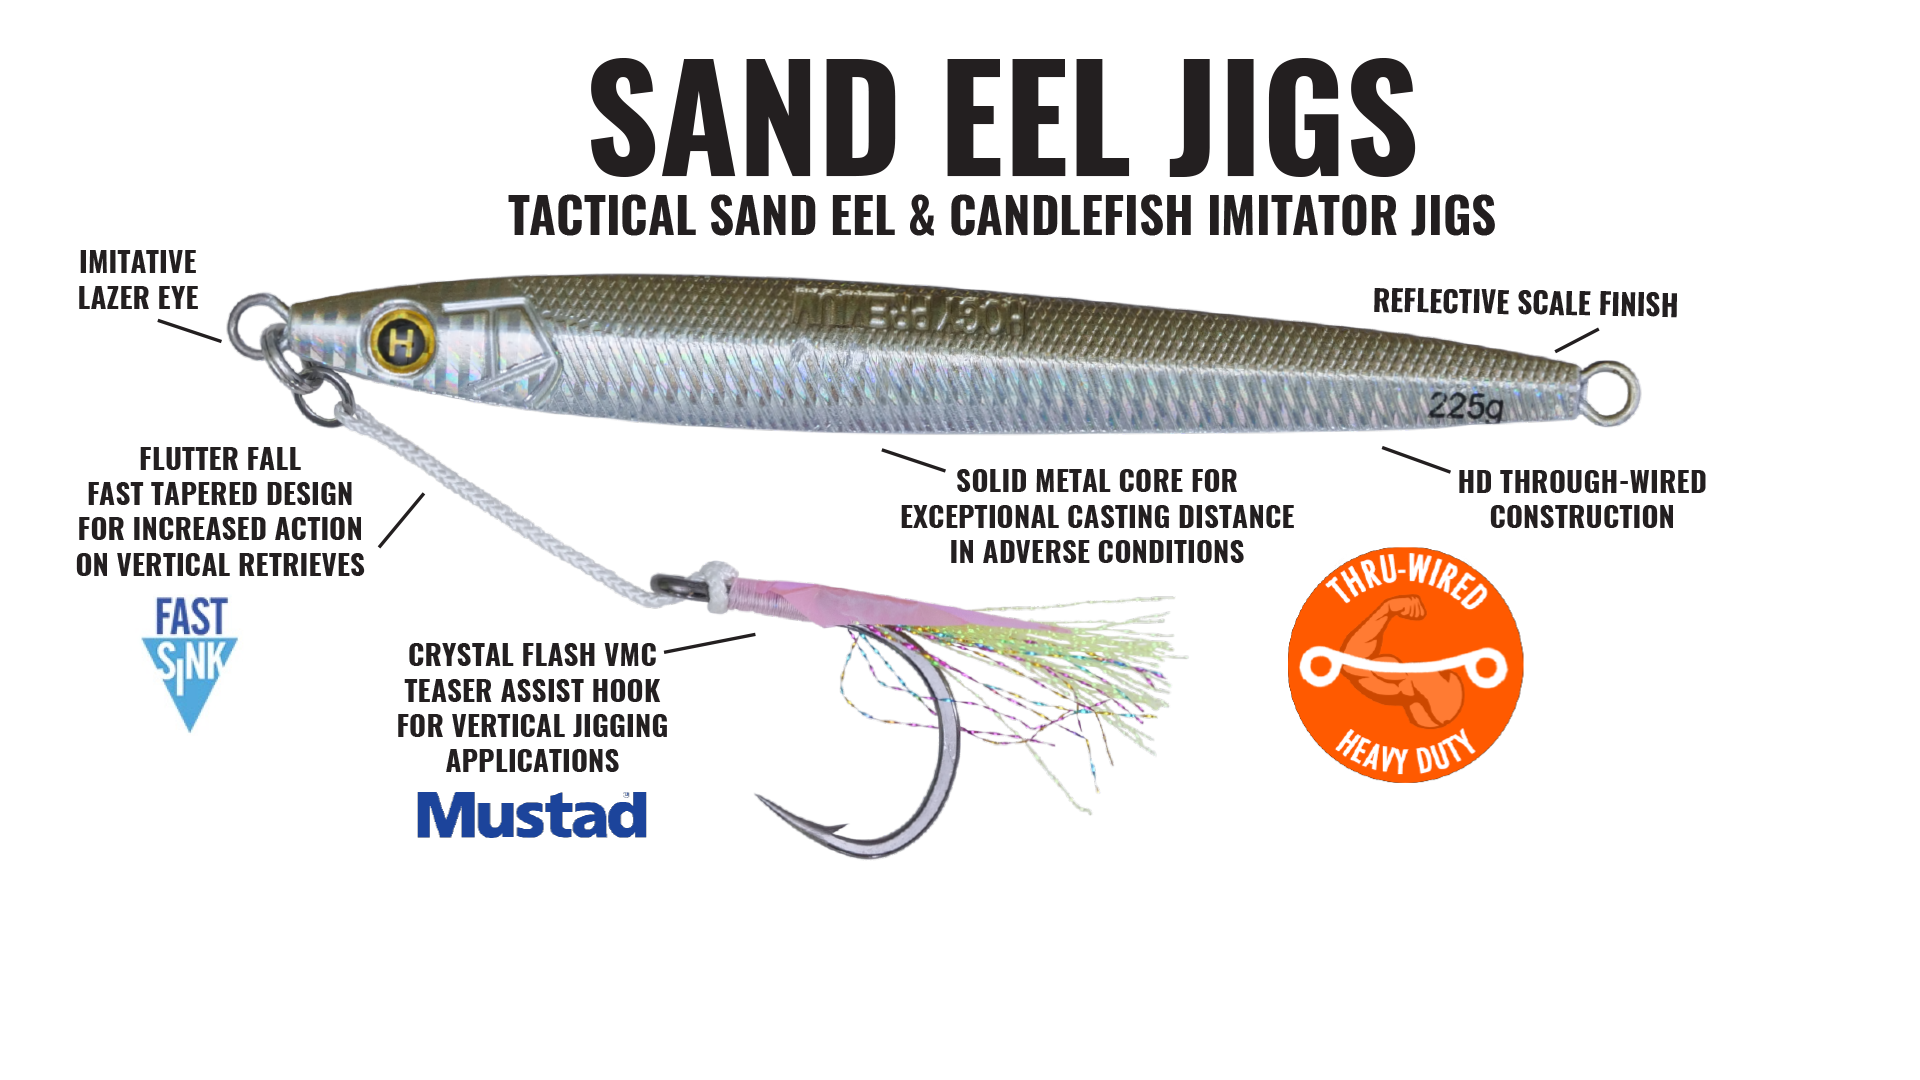 Sand Eel Jigs